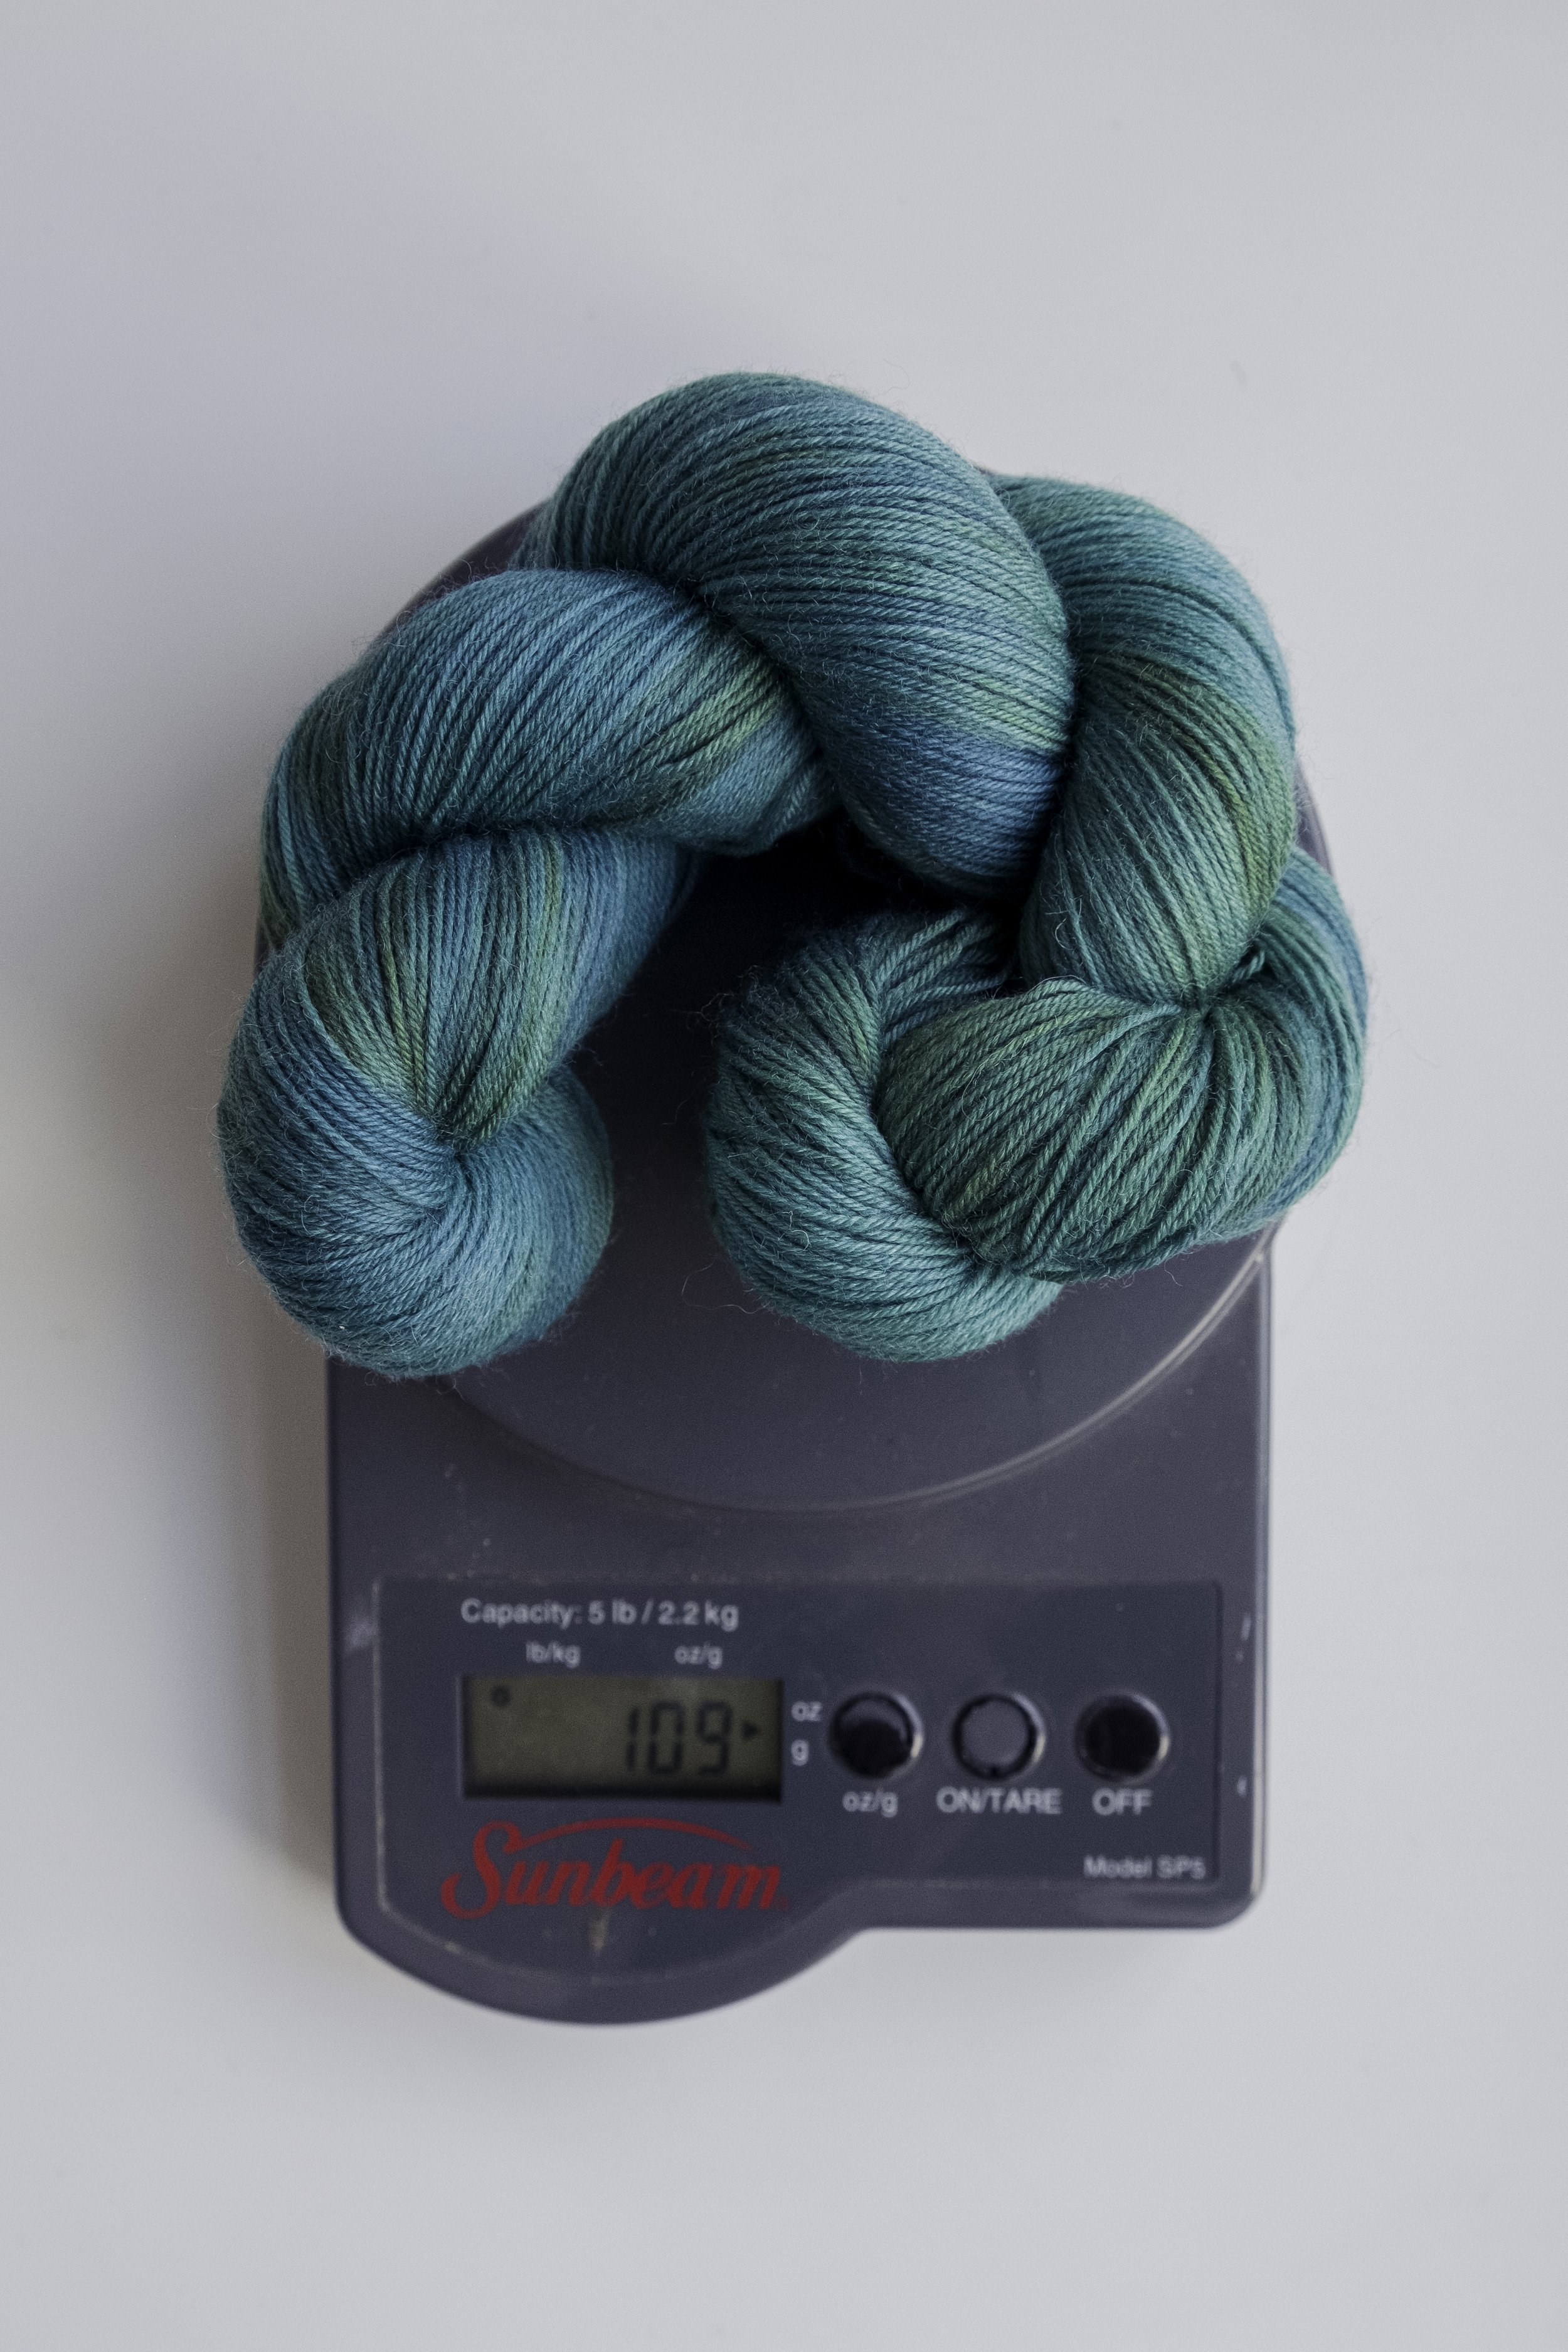 Patty Lyons' Knitting Bag of Tricks: Over 70 sanity saving hacks for better  knitting by Patty Lyons